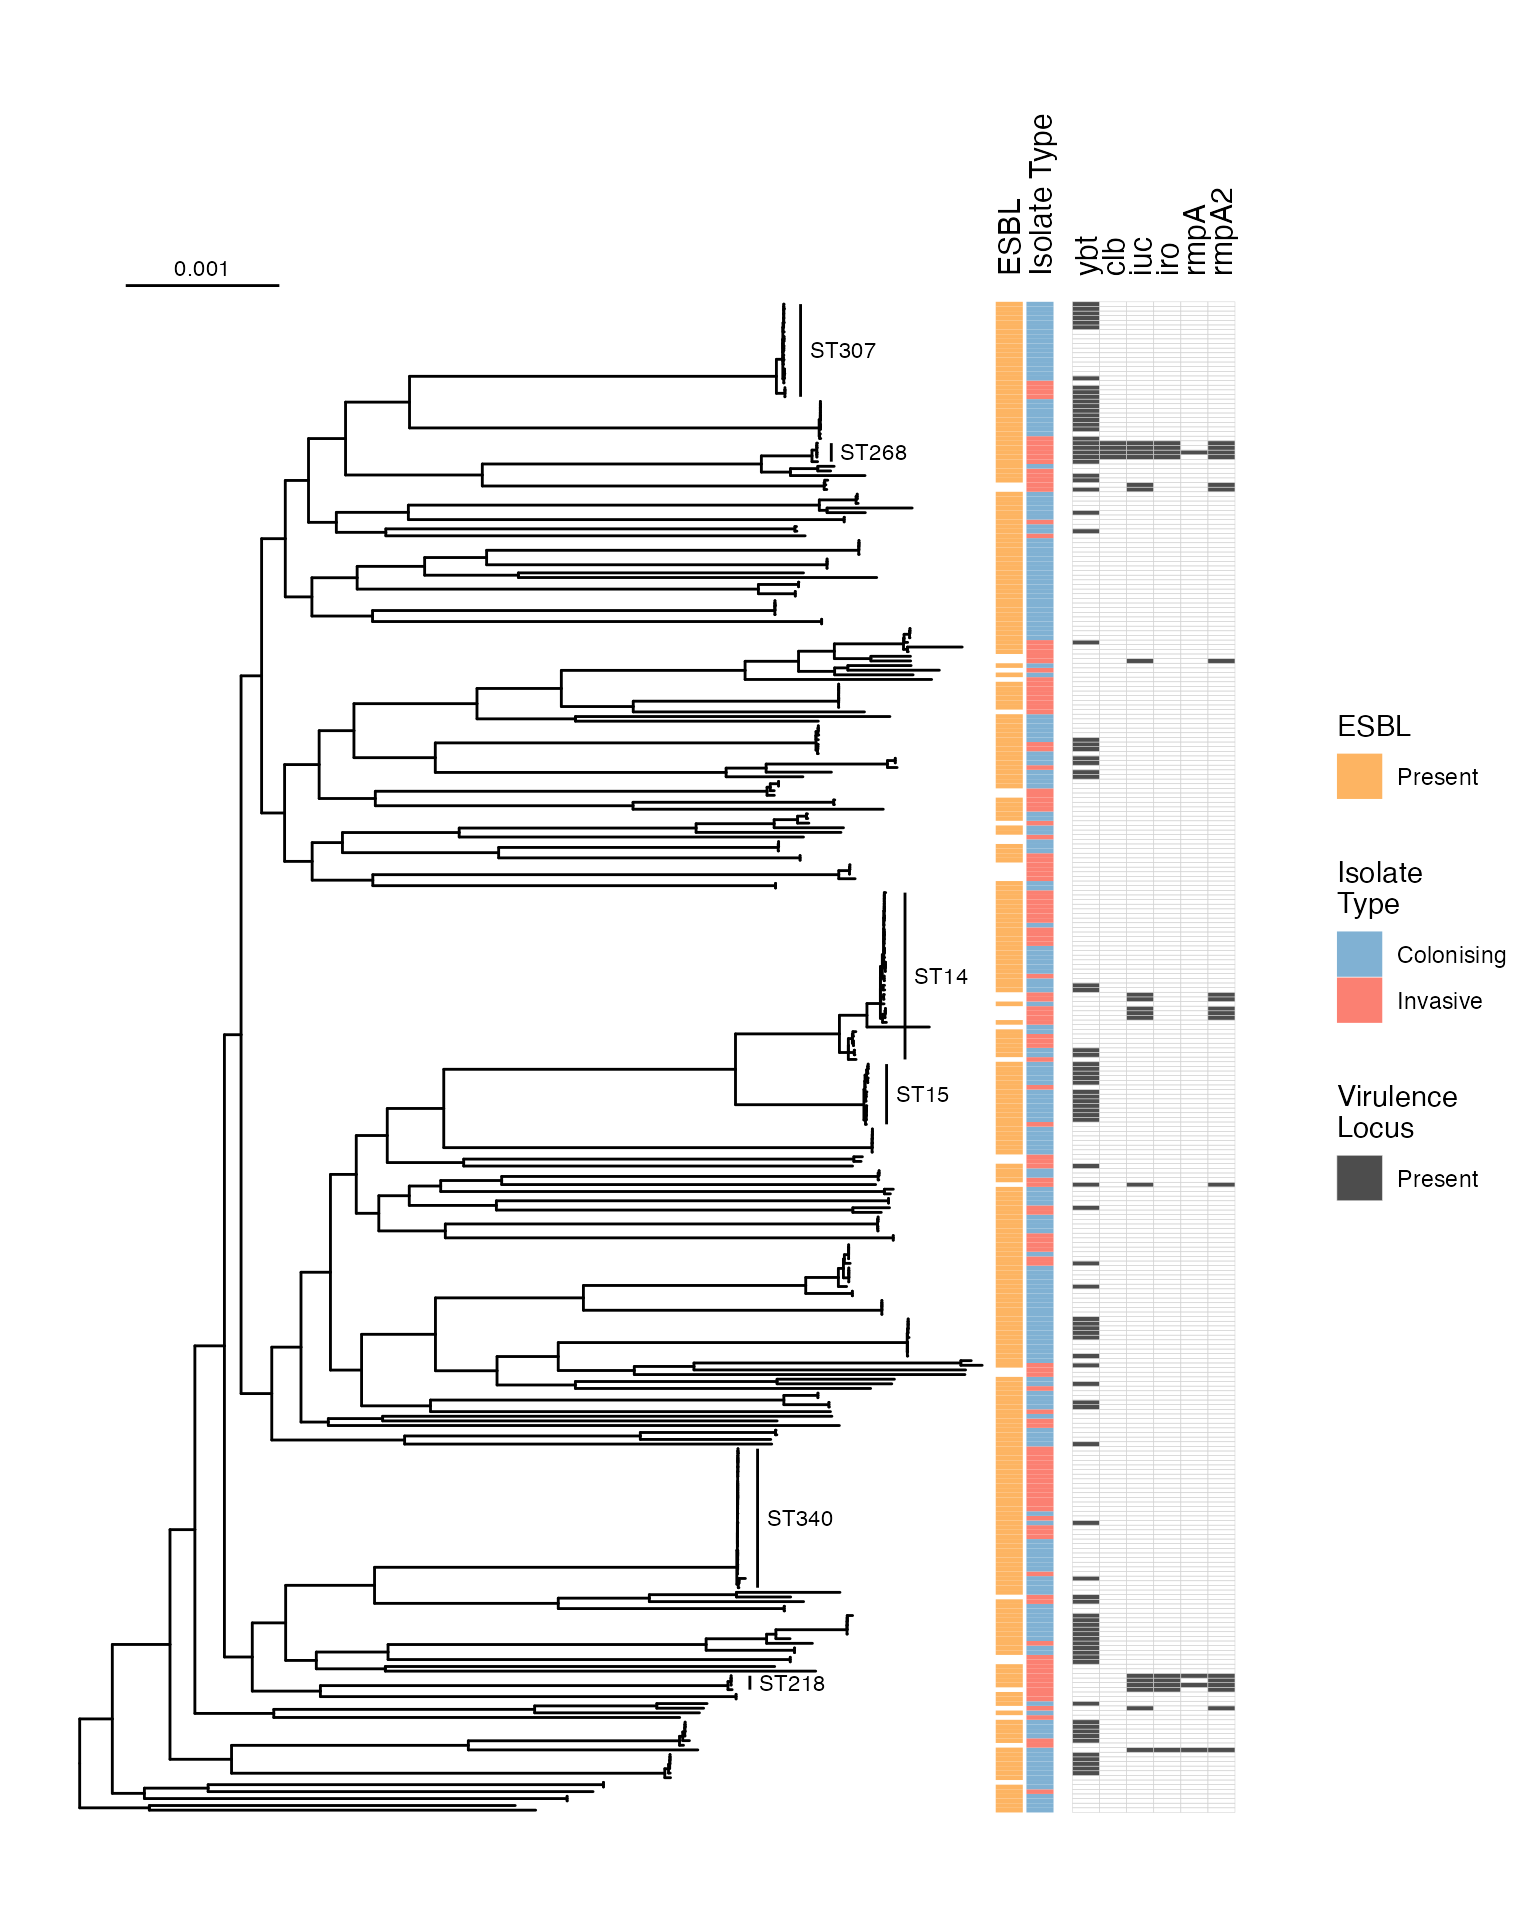 Midpoint rooted core gene maximum likelihood phylogenetic tree of Malawian isolates.